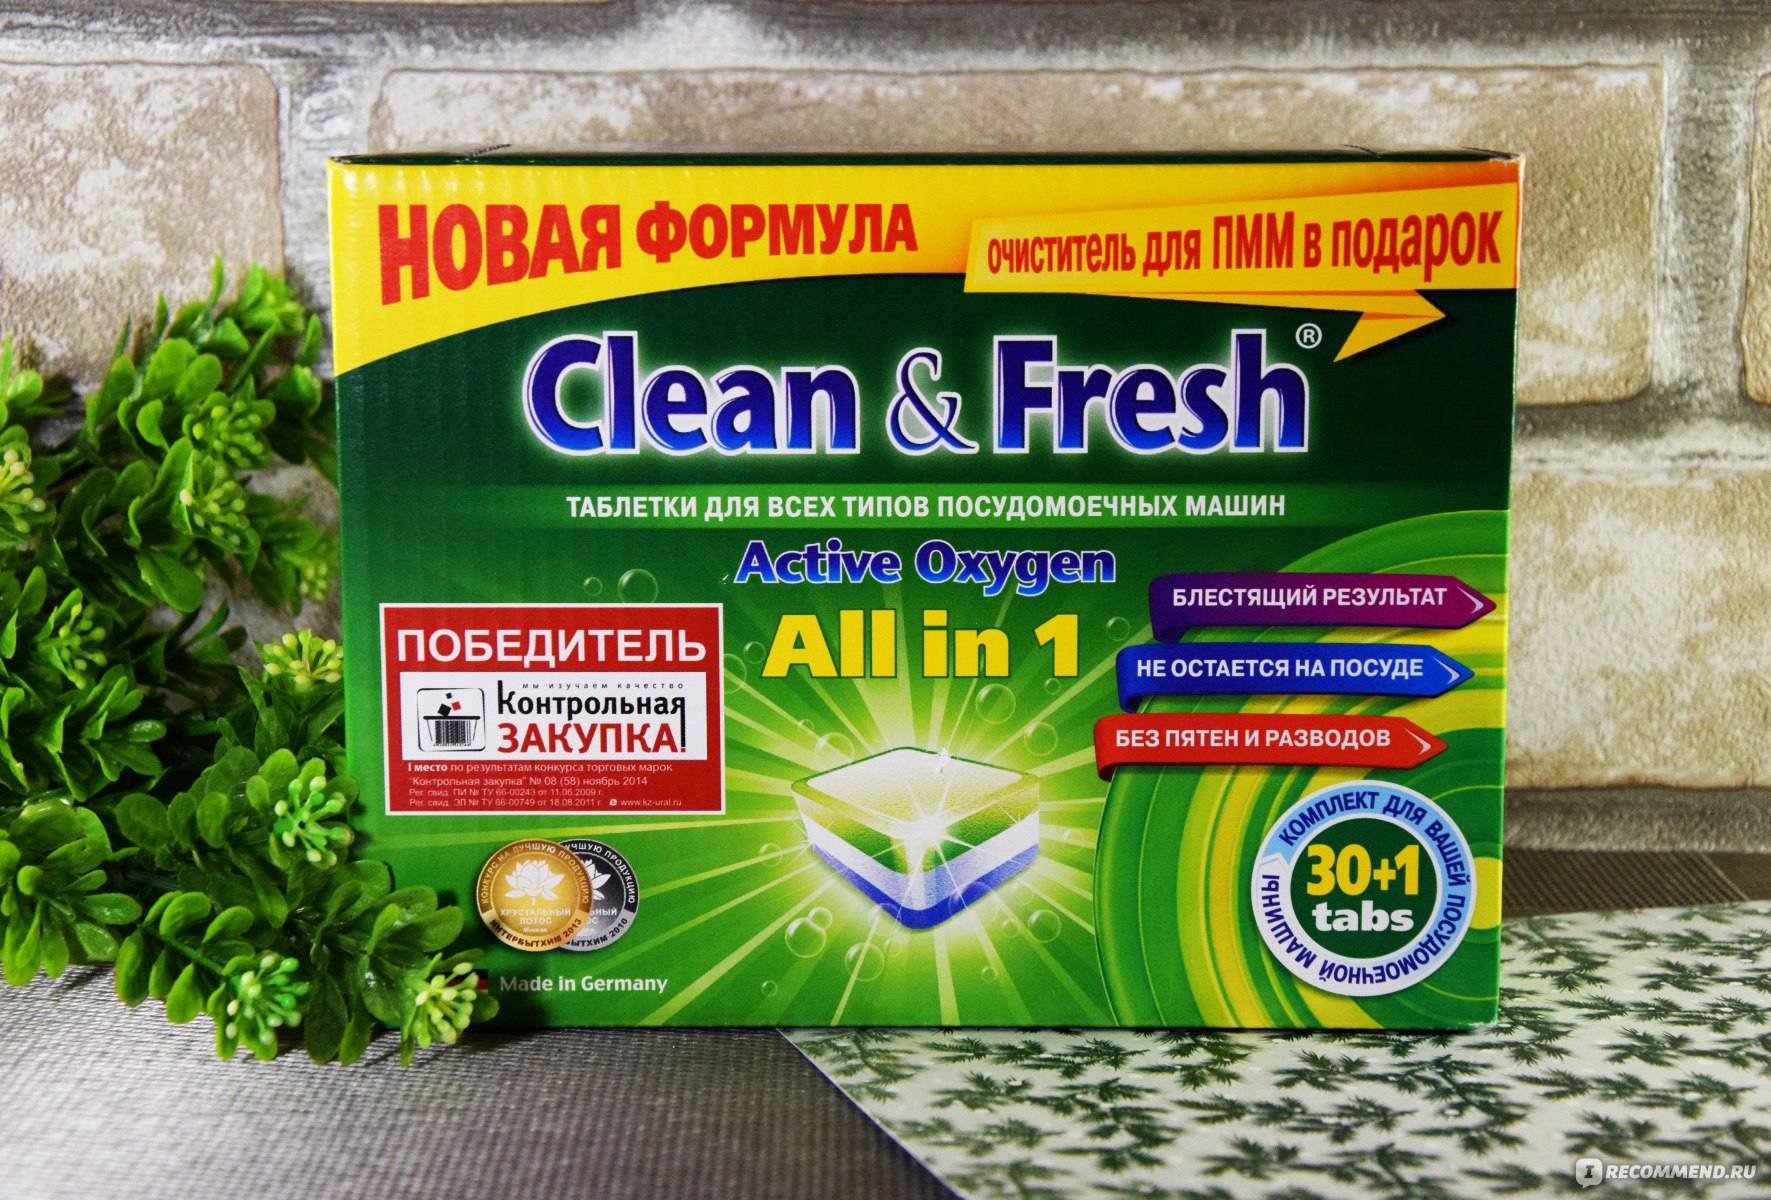 Clean fresh all in 1